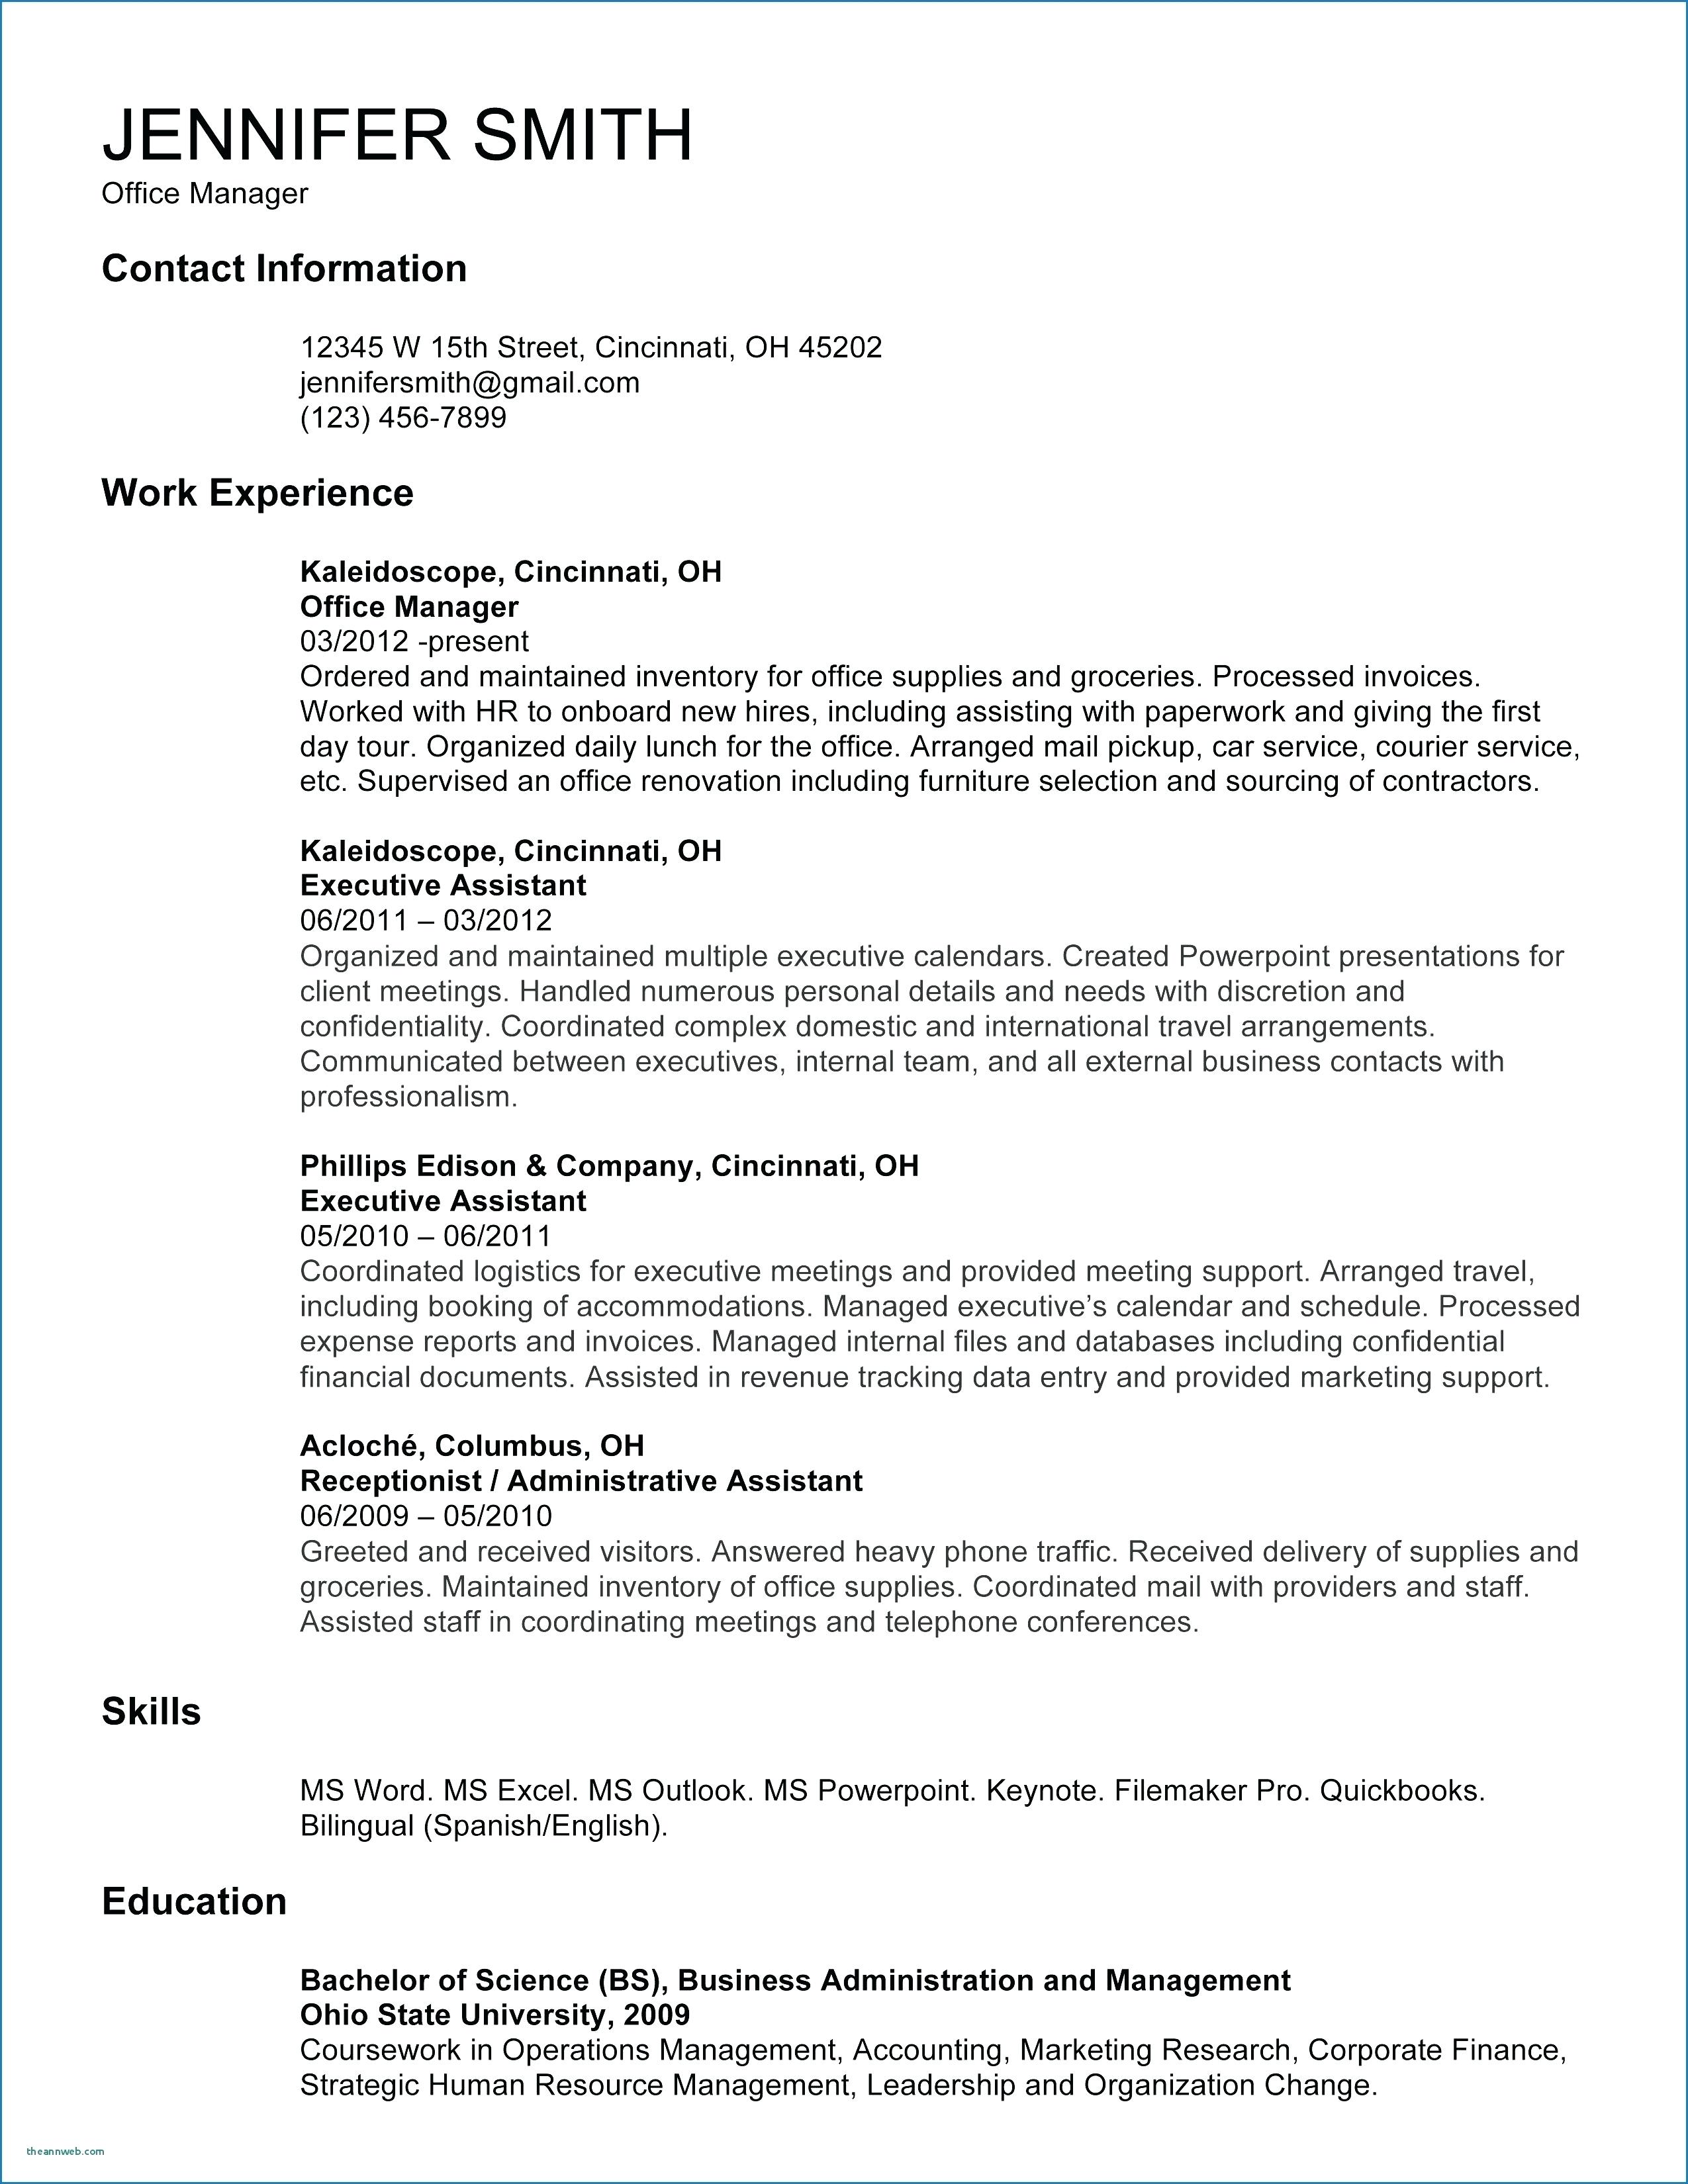 Resume Profile Examples Resume Templates Professional Profiles Examples For Resumes Profile resume profile examples|wikiresume.com